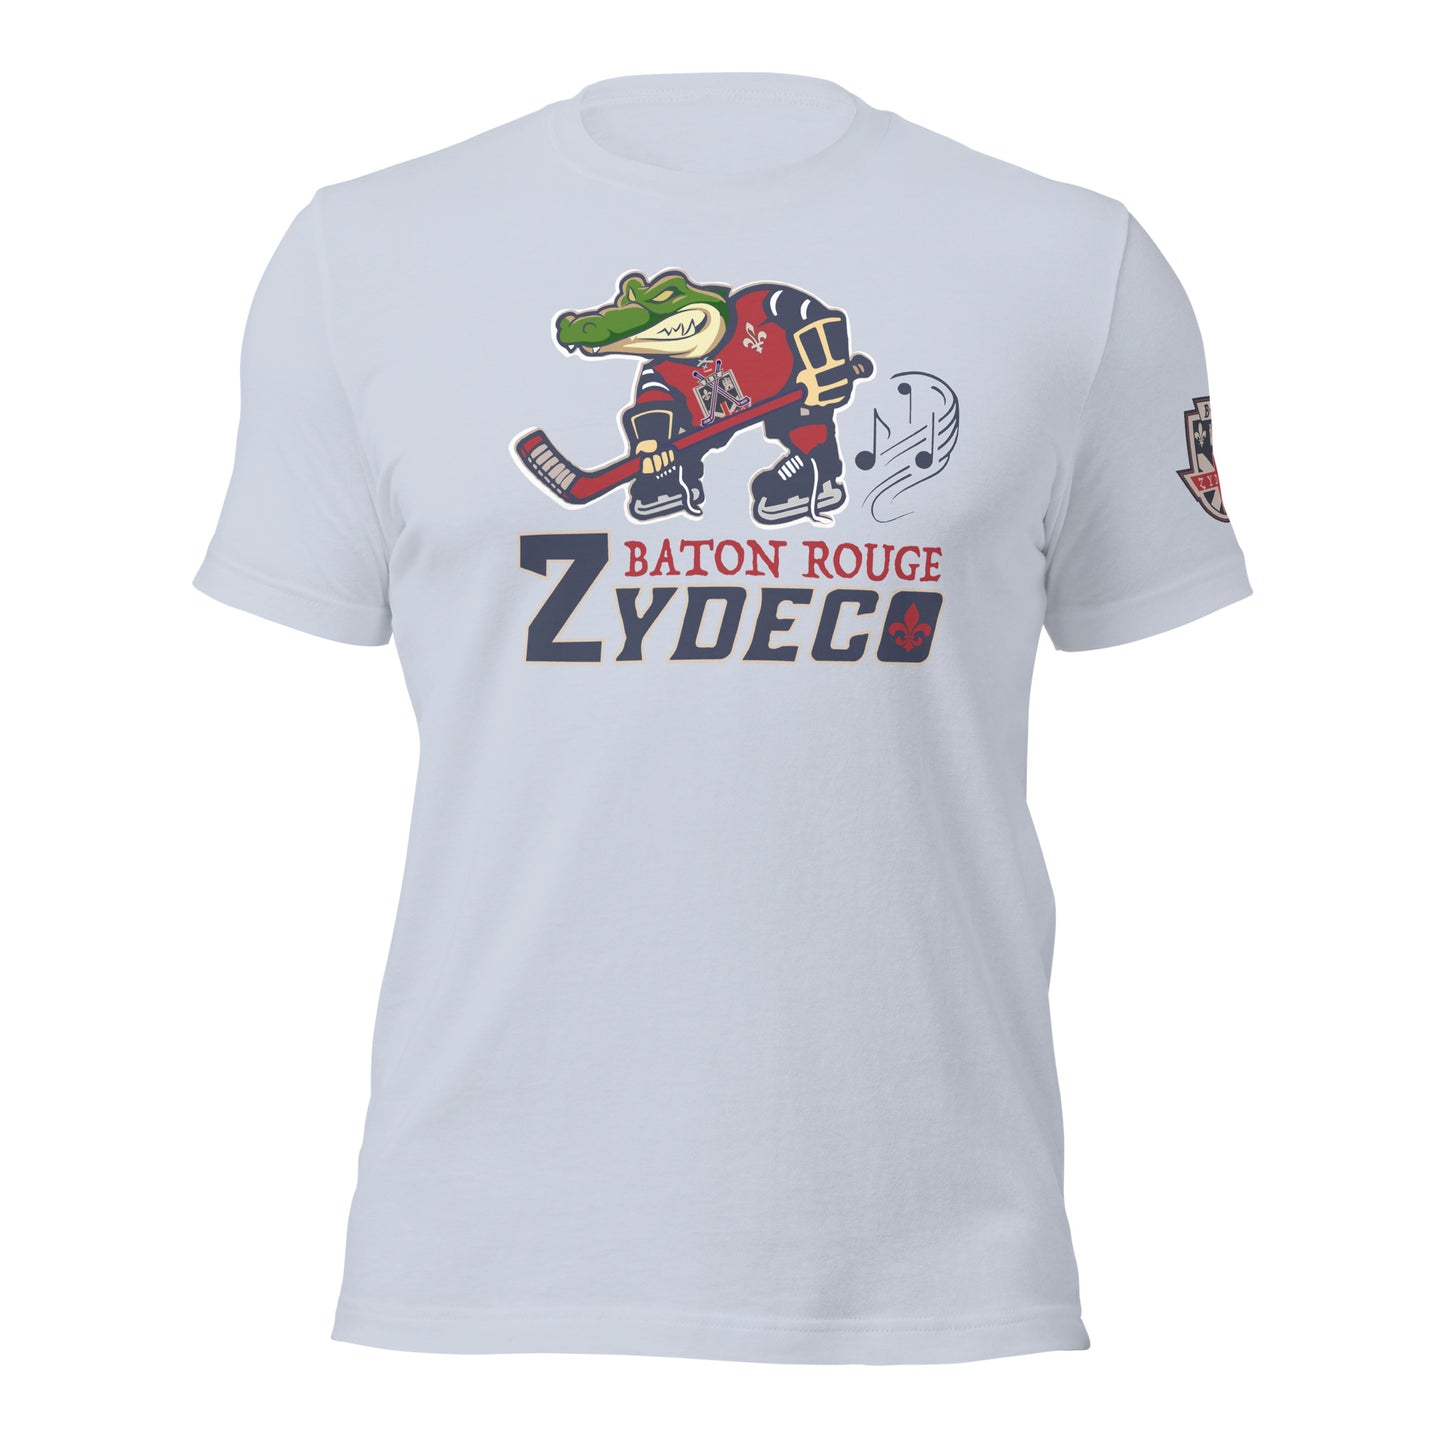 ZYDECO - MASCOT AL LOGO & BADGE ON SLEEVE - BELLA+CANVAS Unisex t-shirt